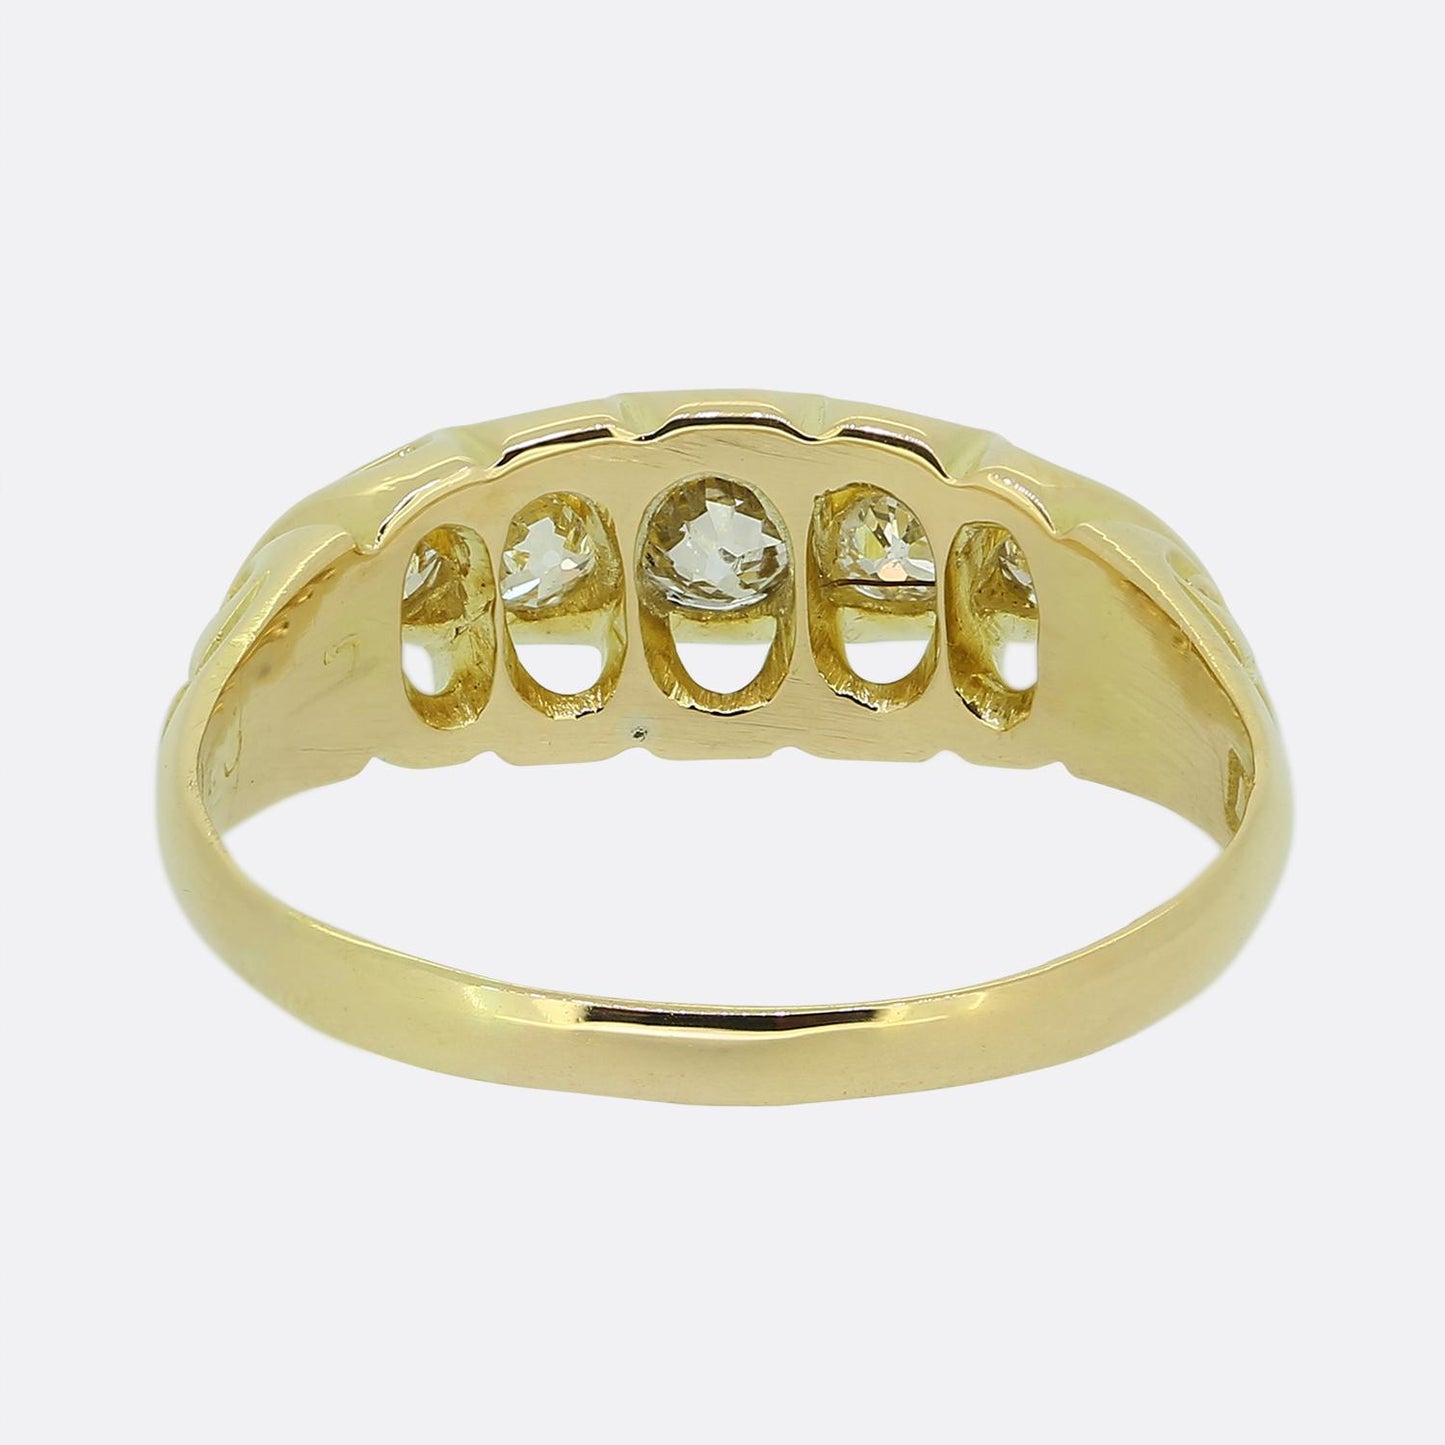 Edwardian Five-Stone Diamond Ring